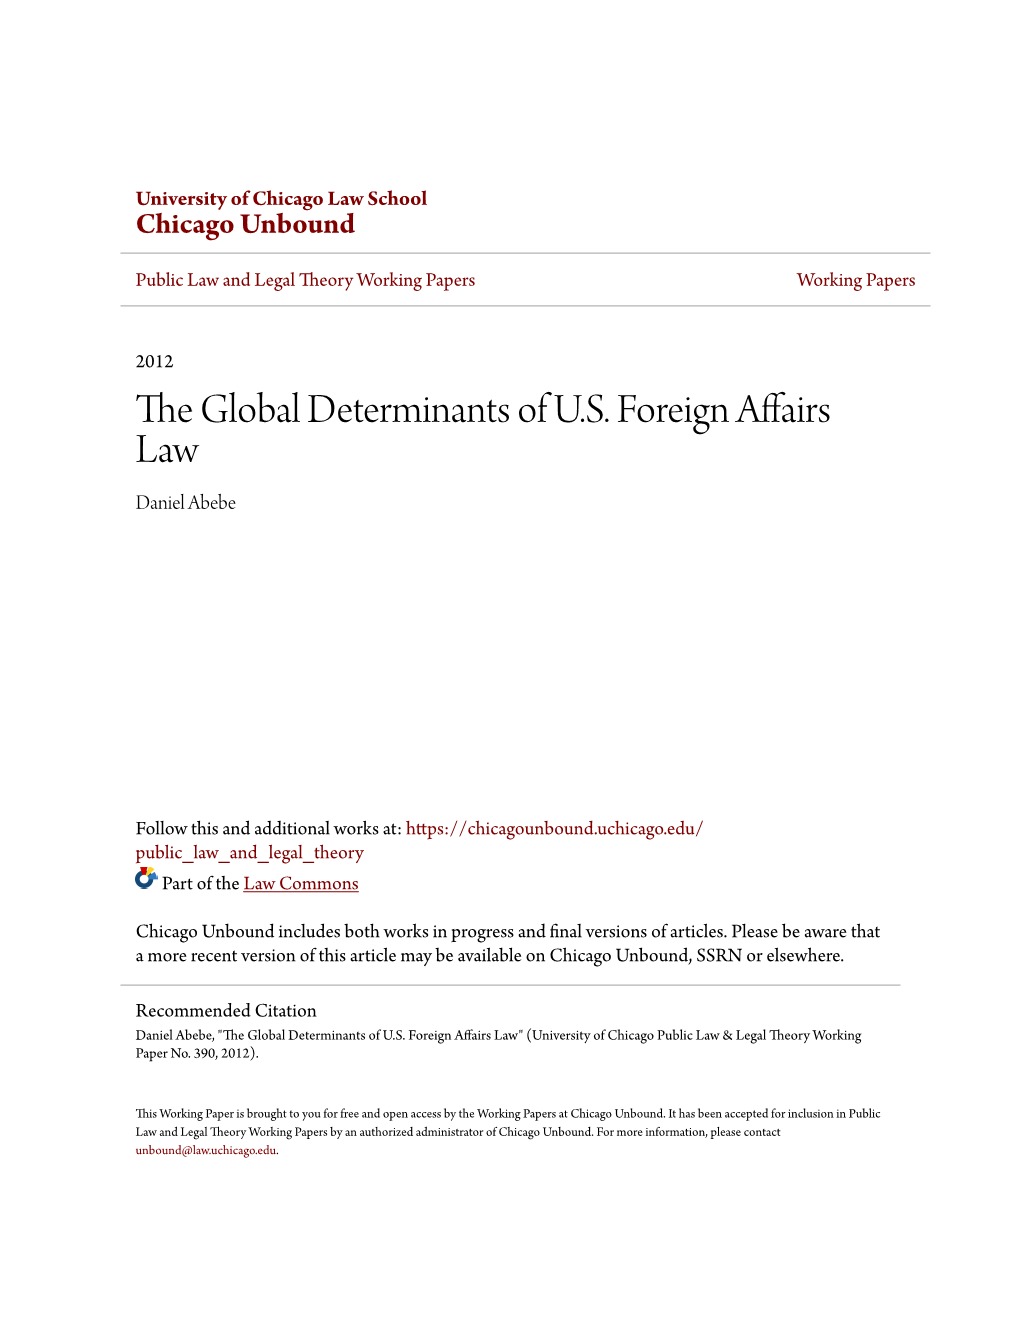 The Global Determinants of U.S. Foreign Affairs Law Daniel Abebe